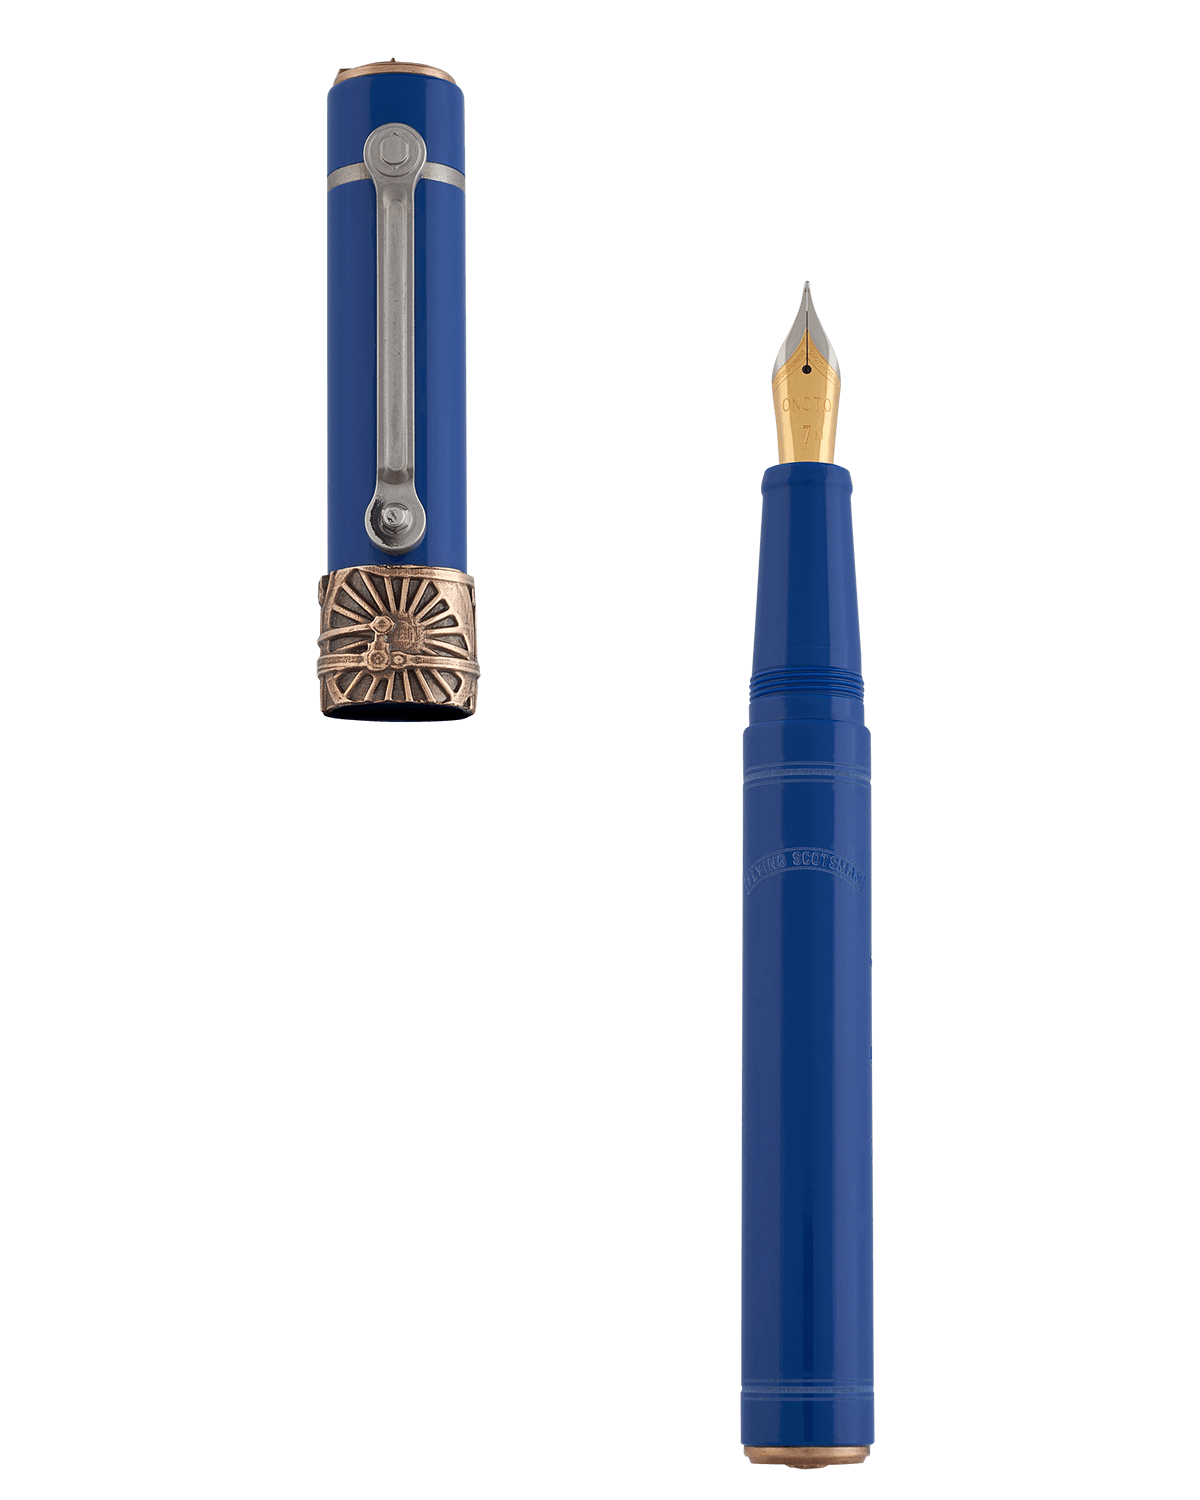 The Pickwick Fountain Pen | Onoto The Pen